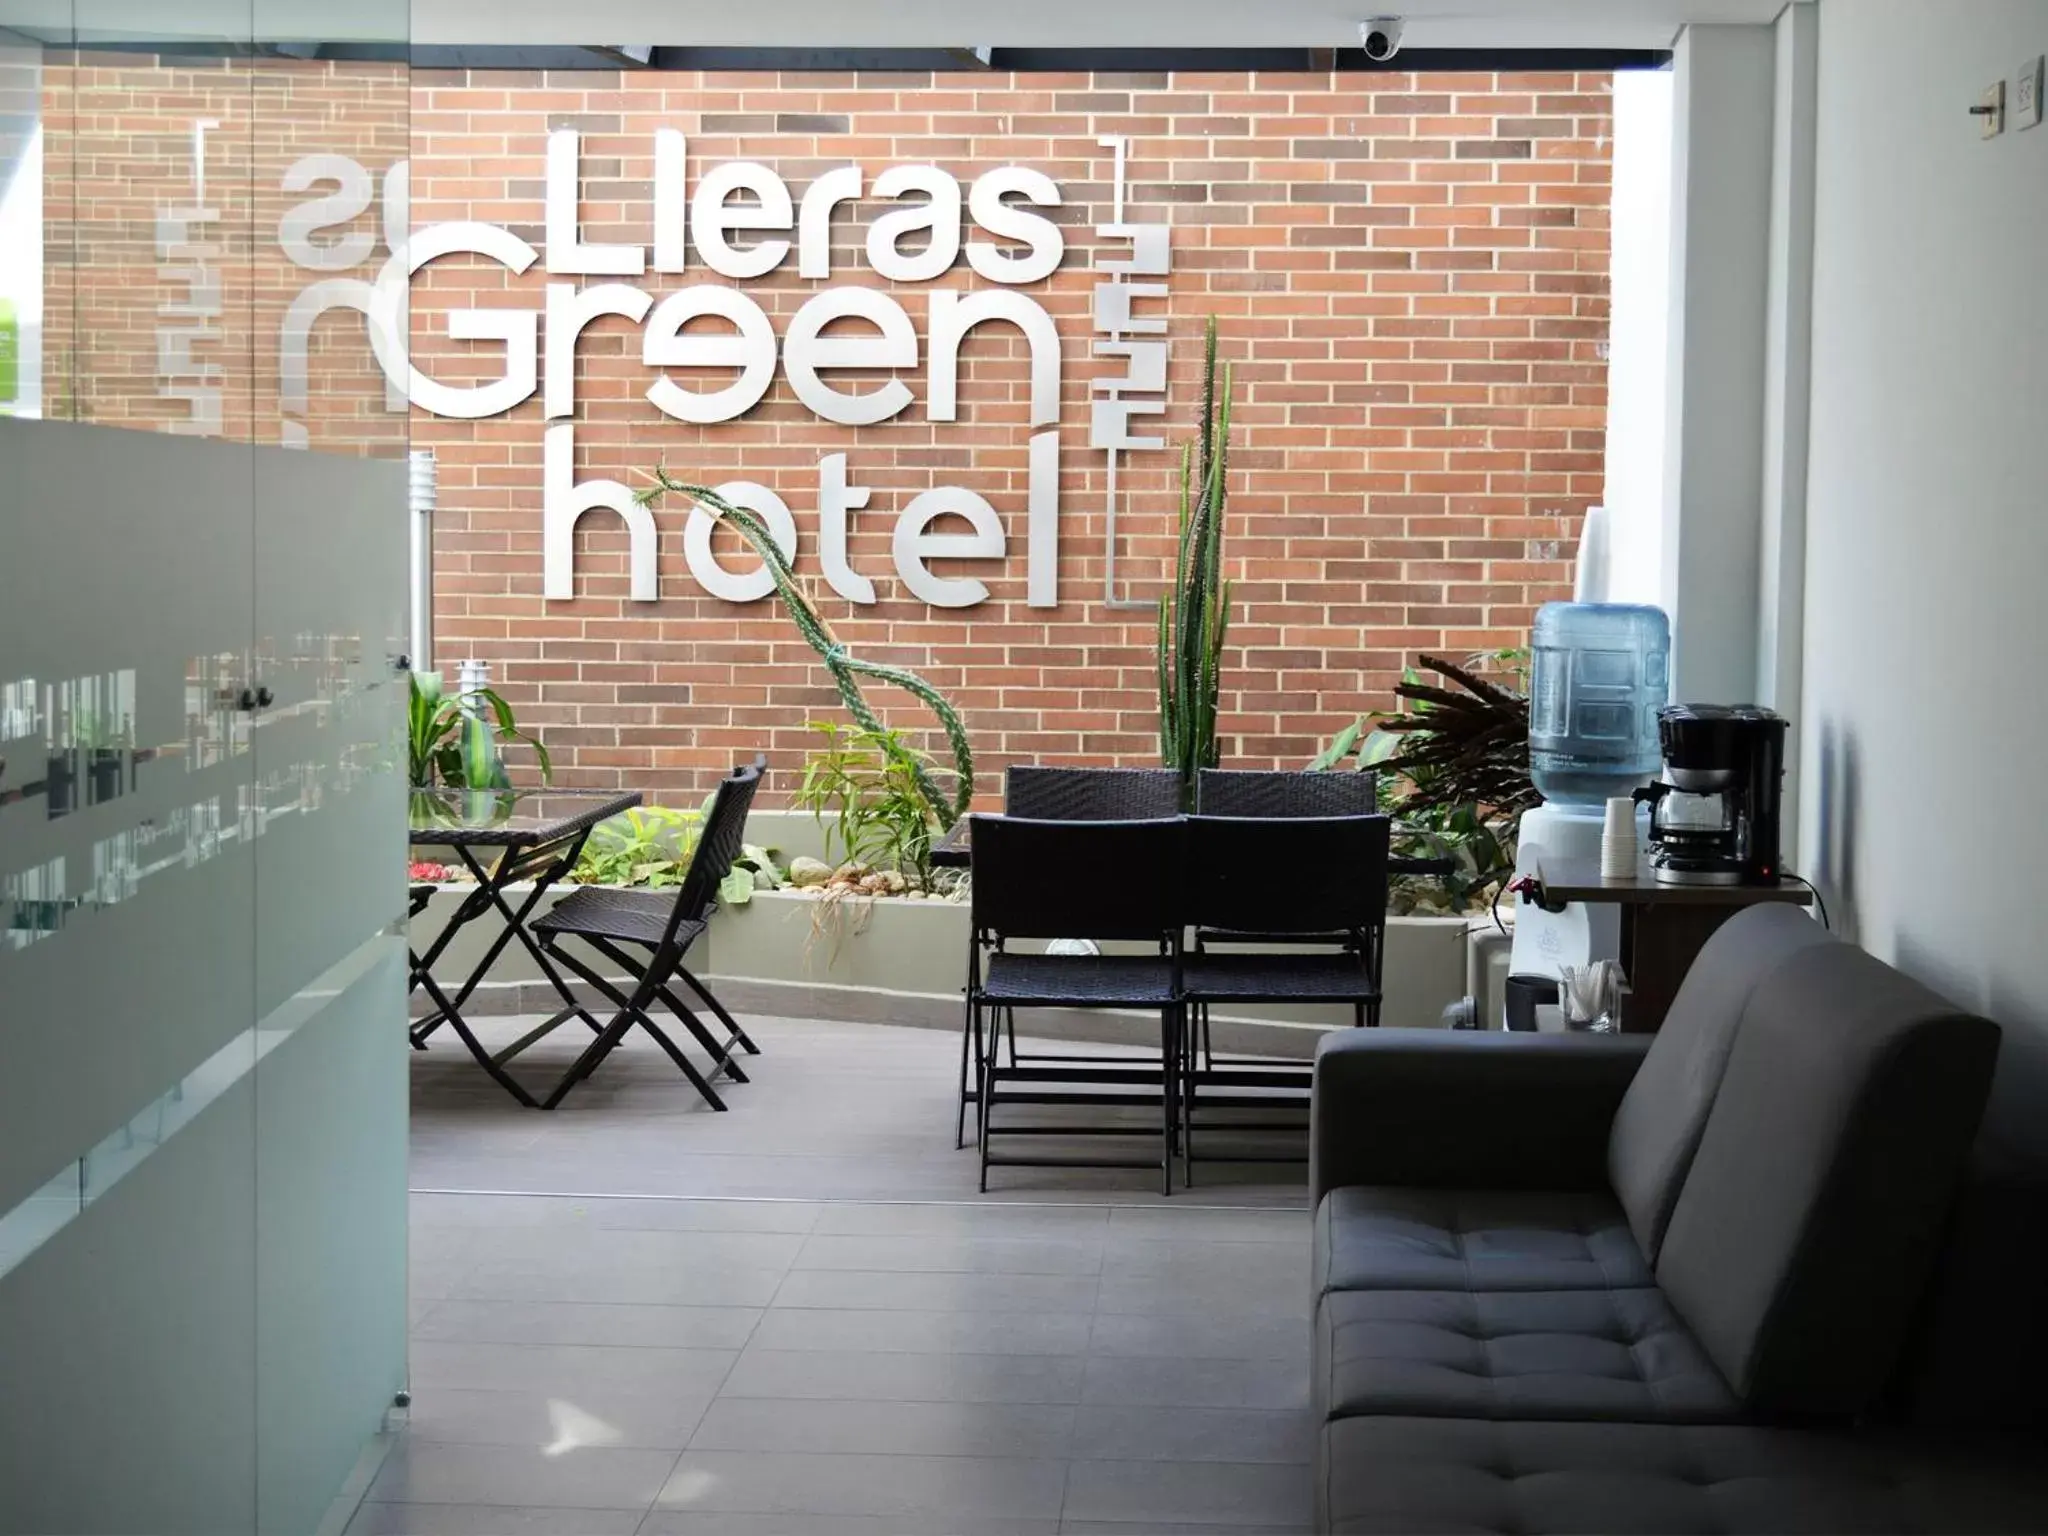 Property building in Lleras Green Hotel